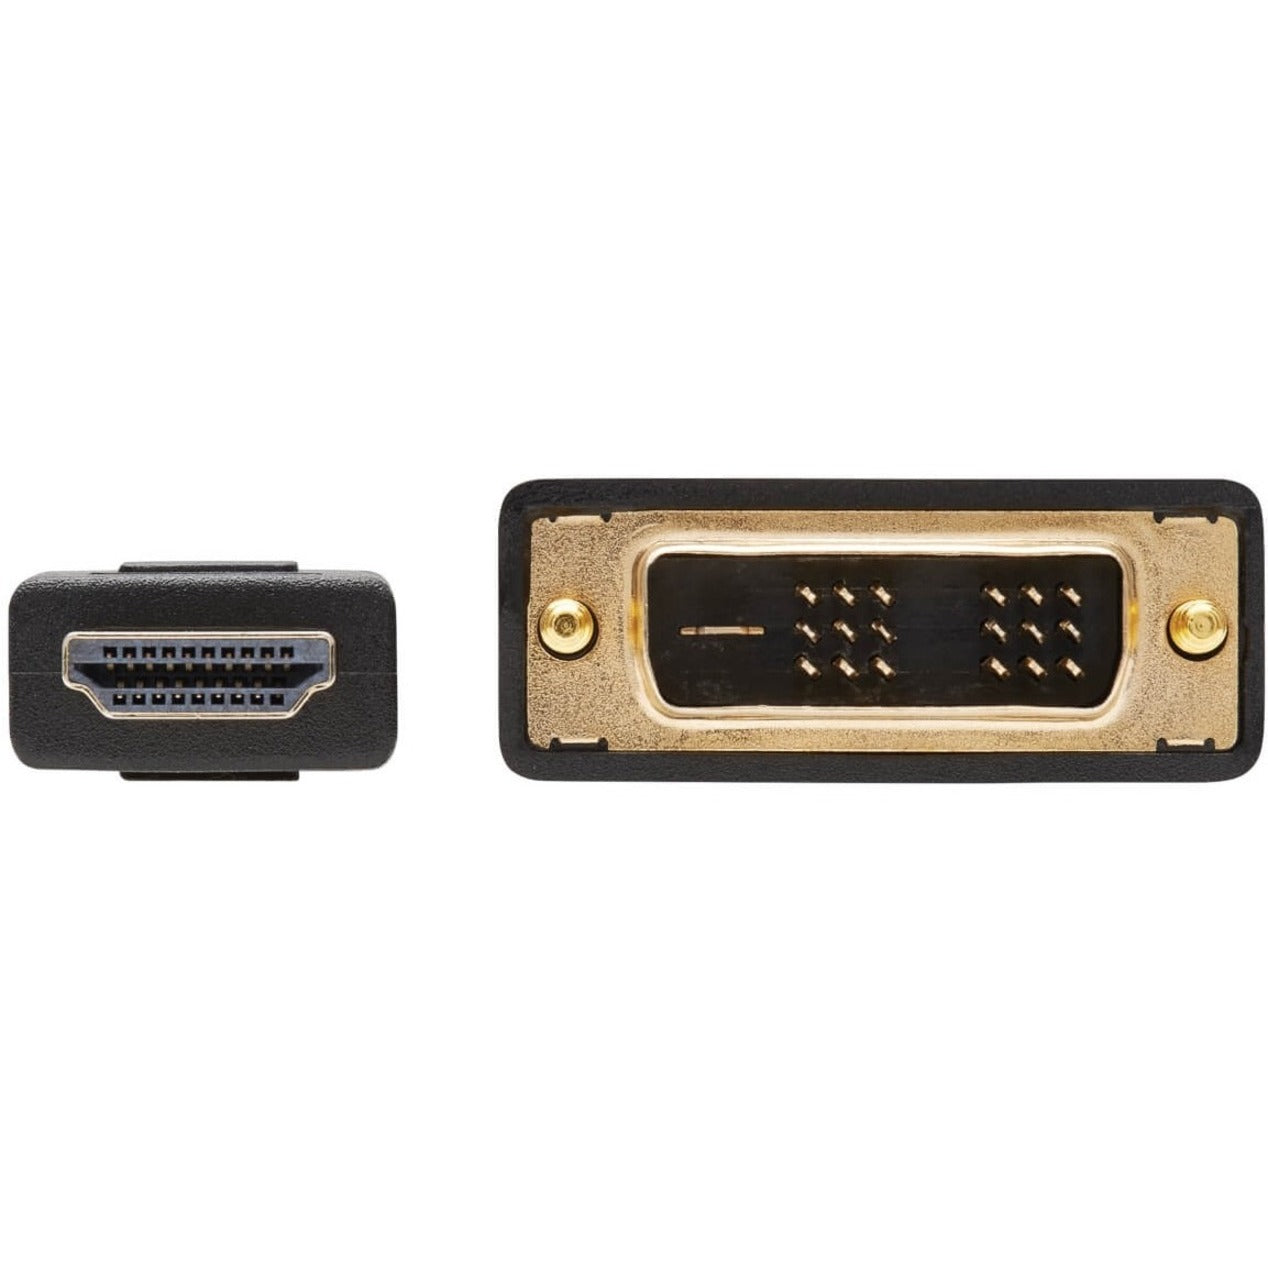 Tripp Lite P566-006 6' HDMI/DVI Cable, Black